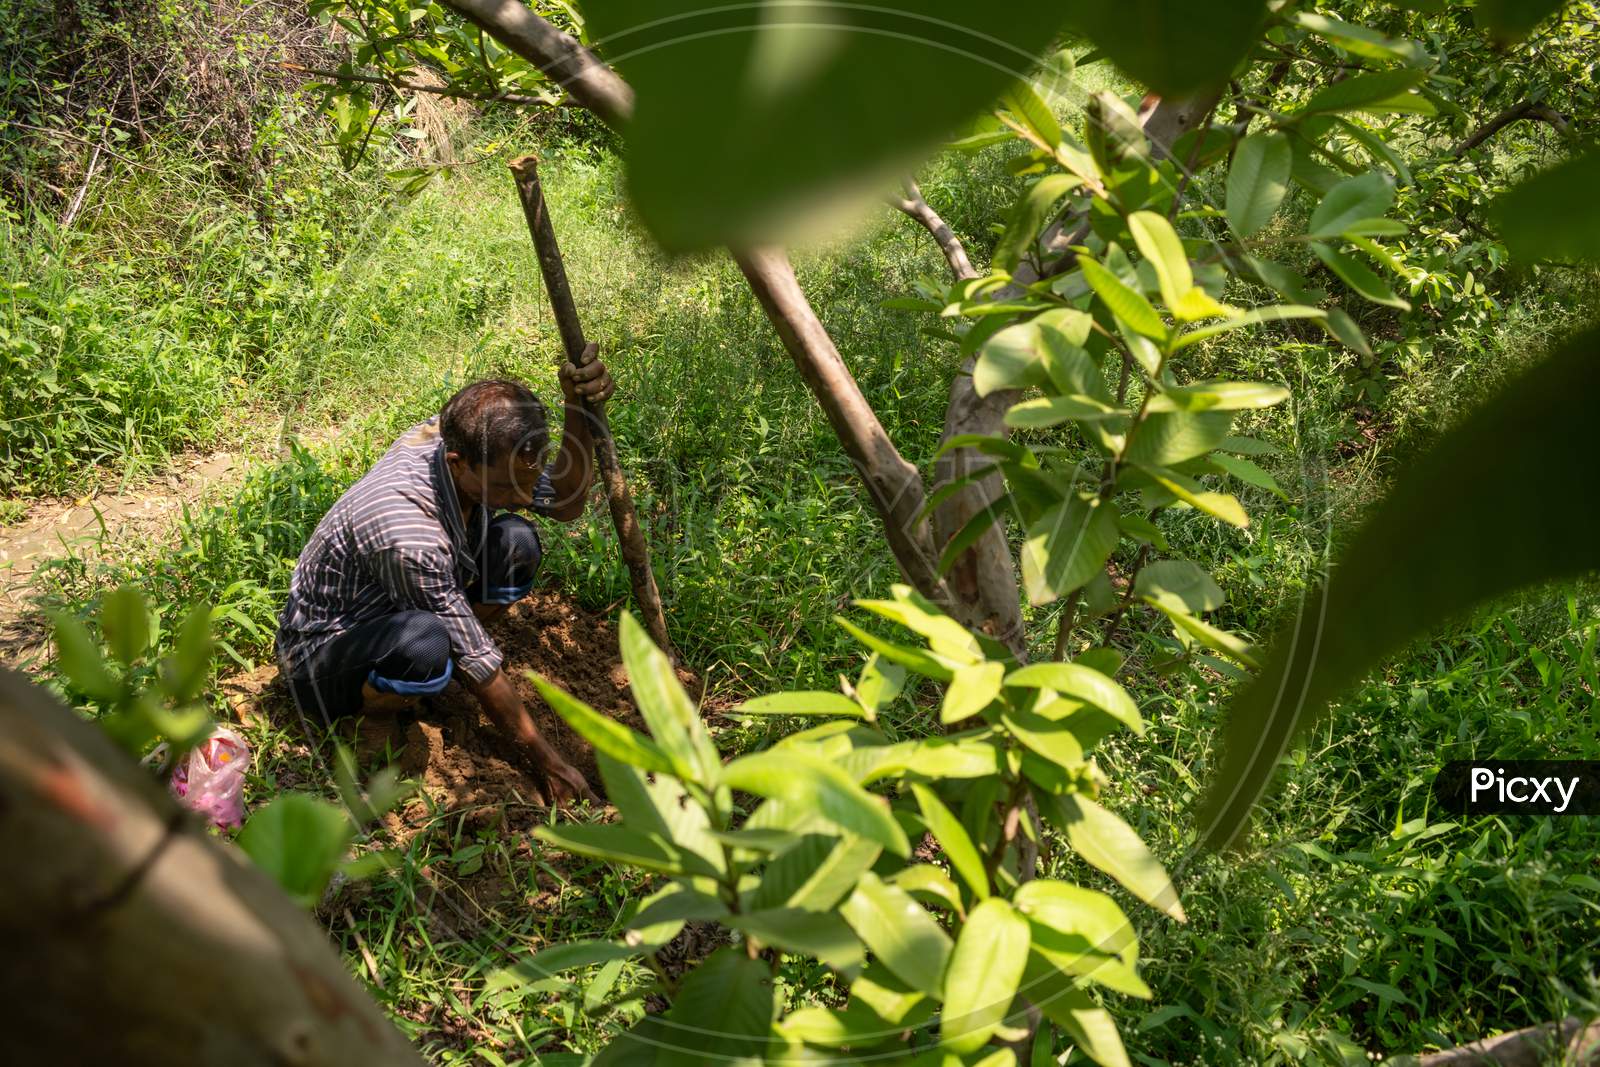 A man digging soil for plantation of guava trees at a farm using a digging tool